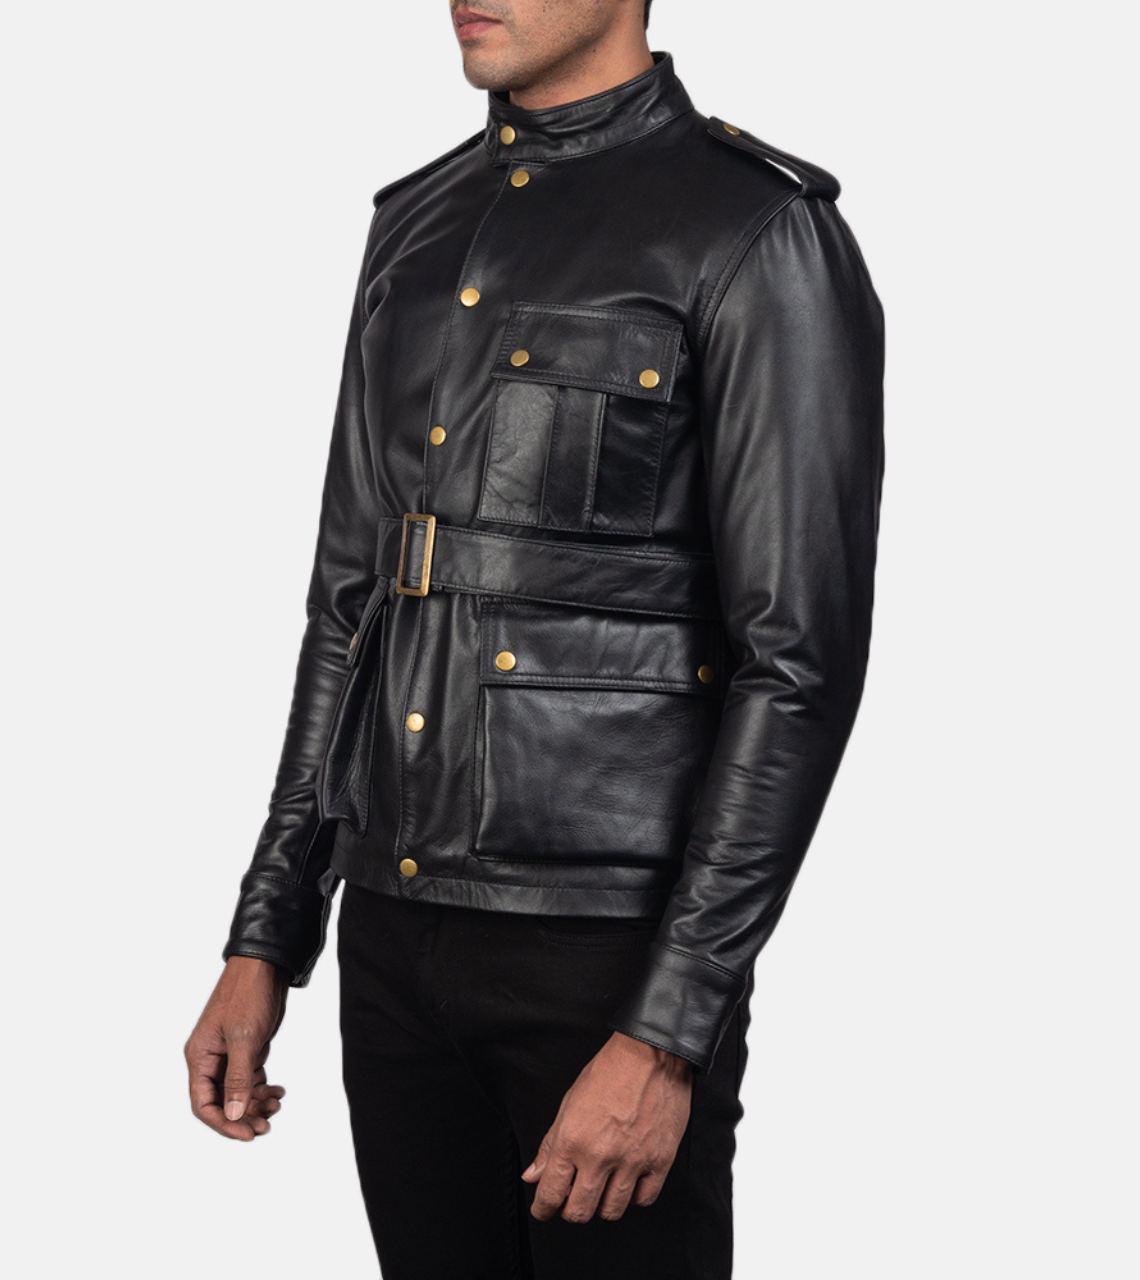  Hauspuff Black Men's Leather Jacket 